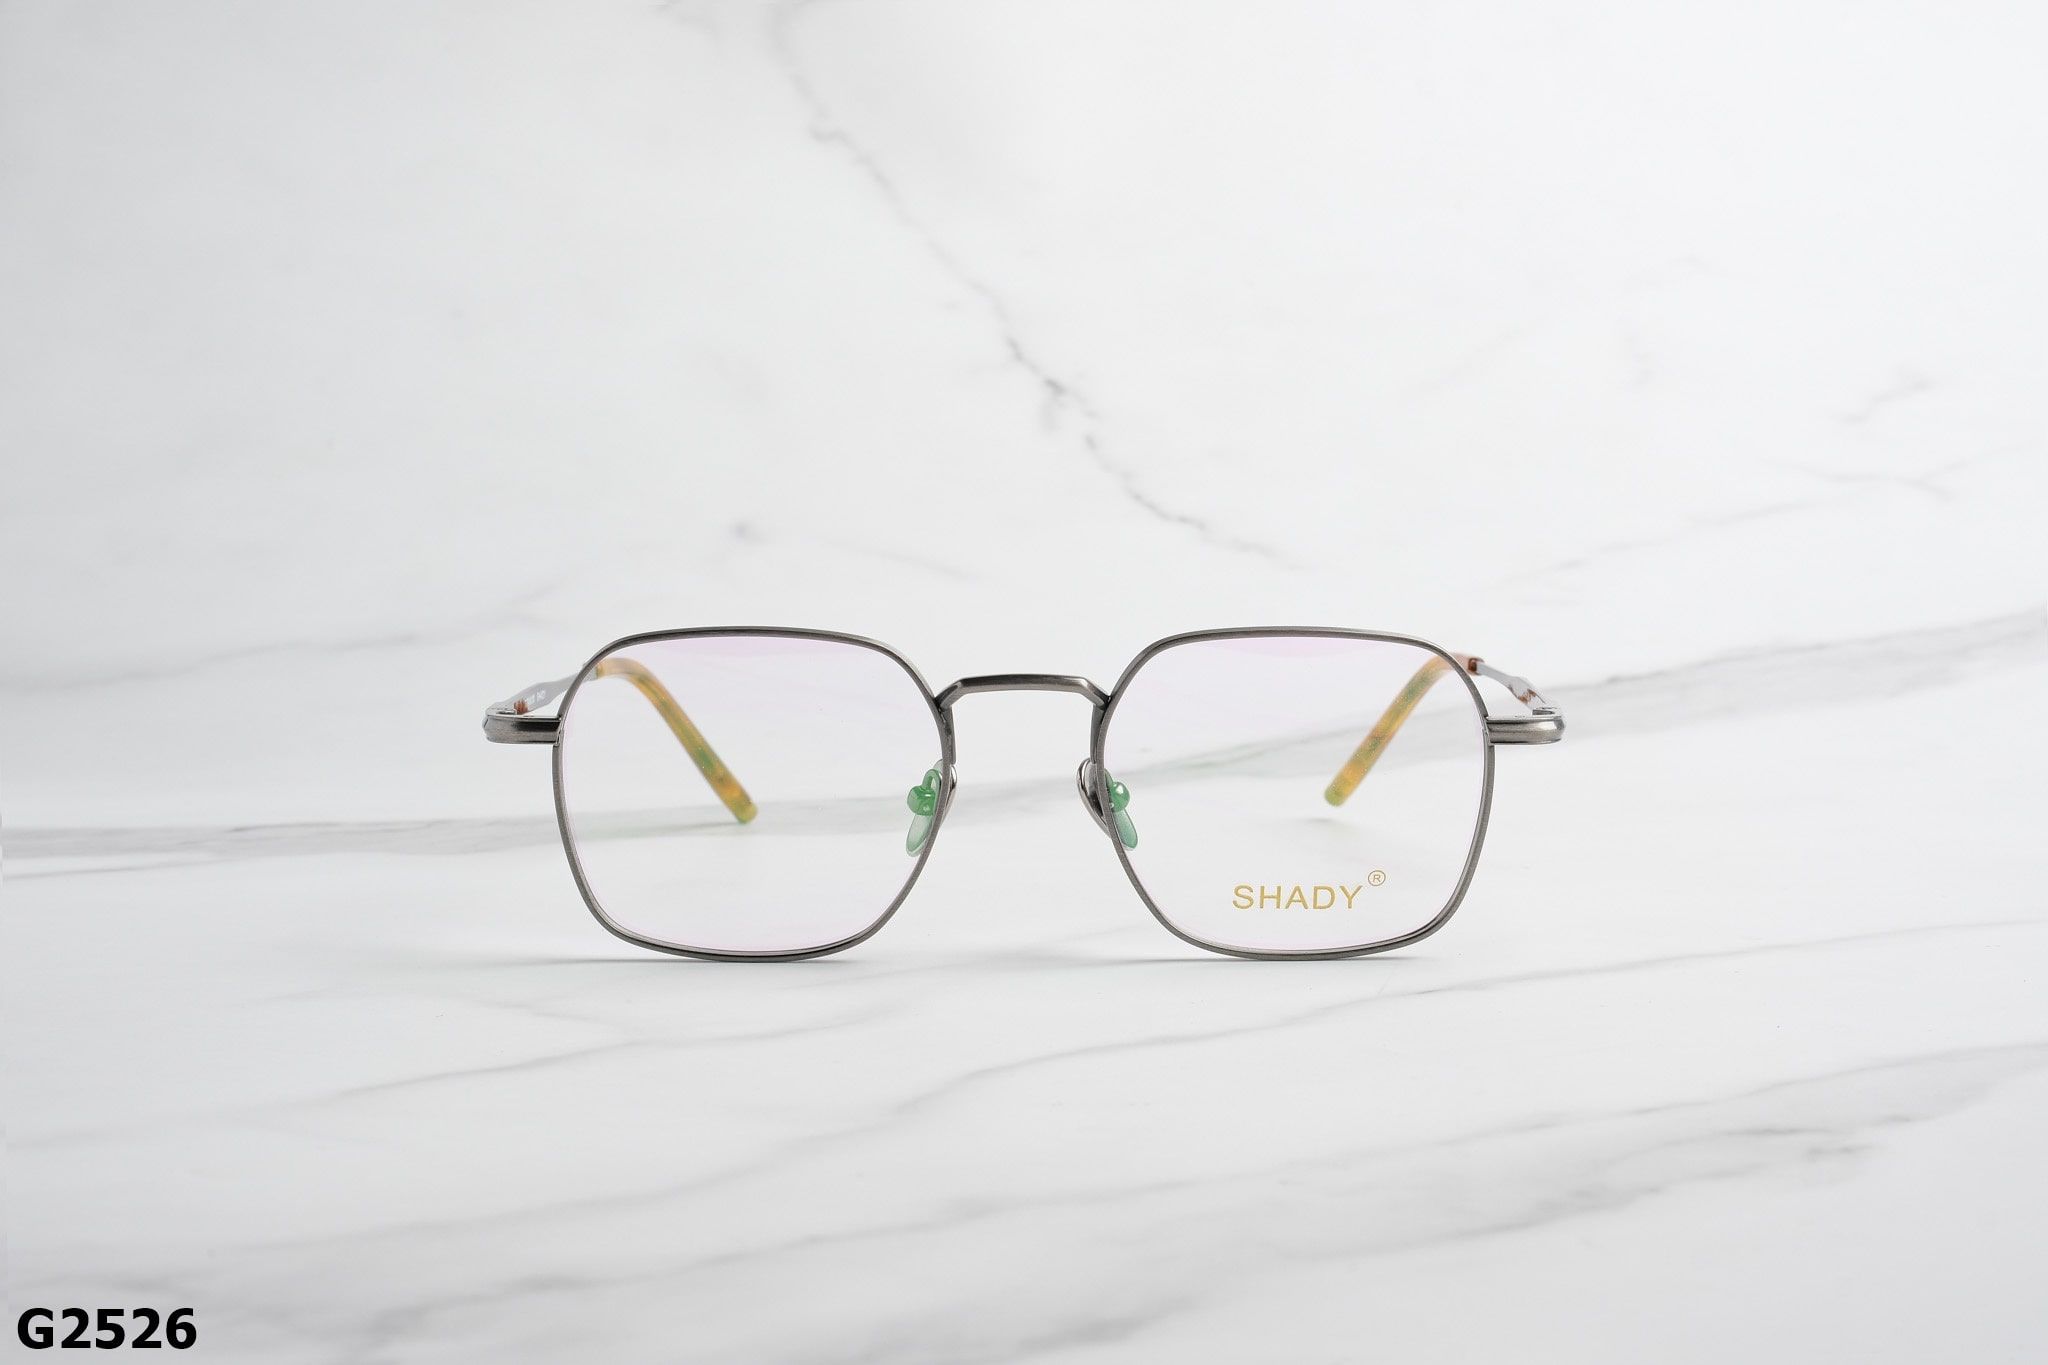  SHADY Eyewear - Glasses - G2526 